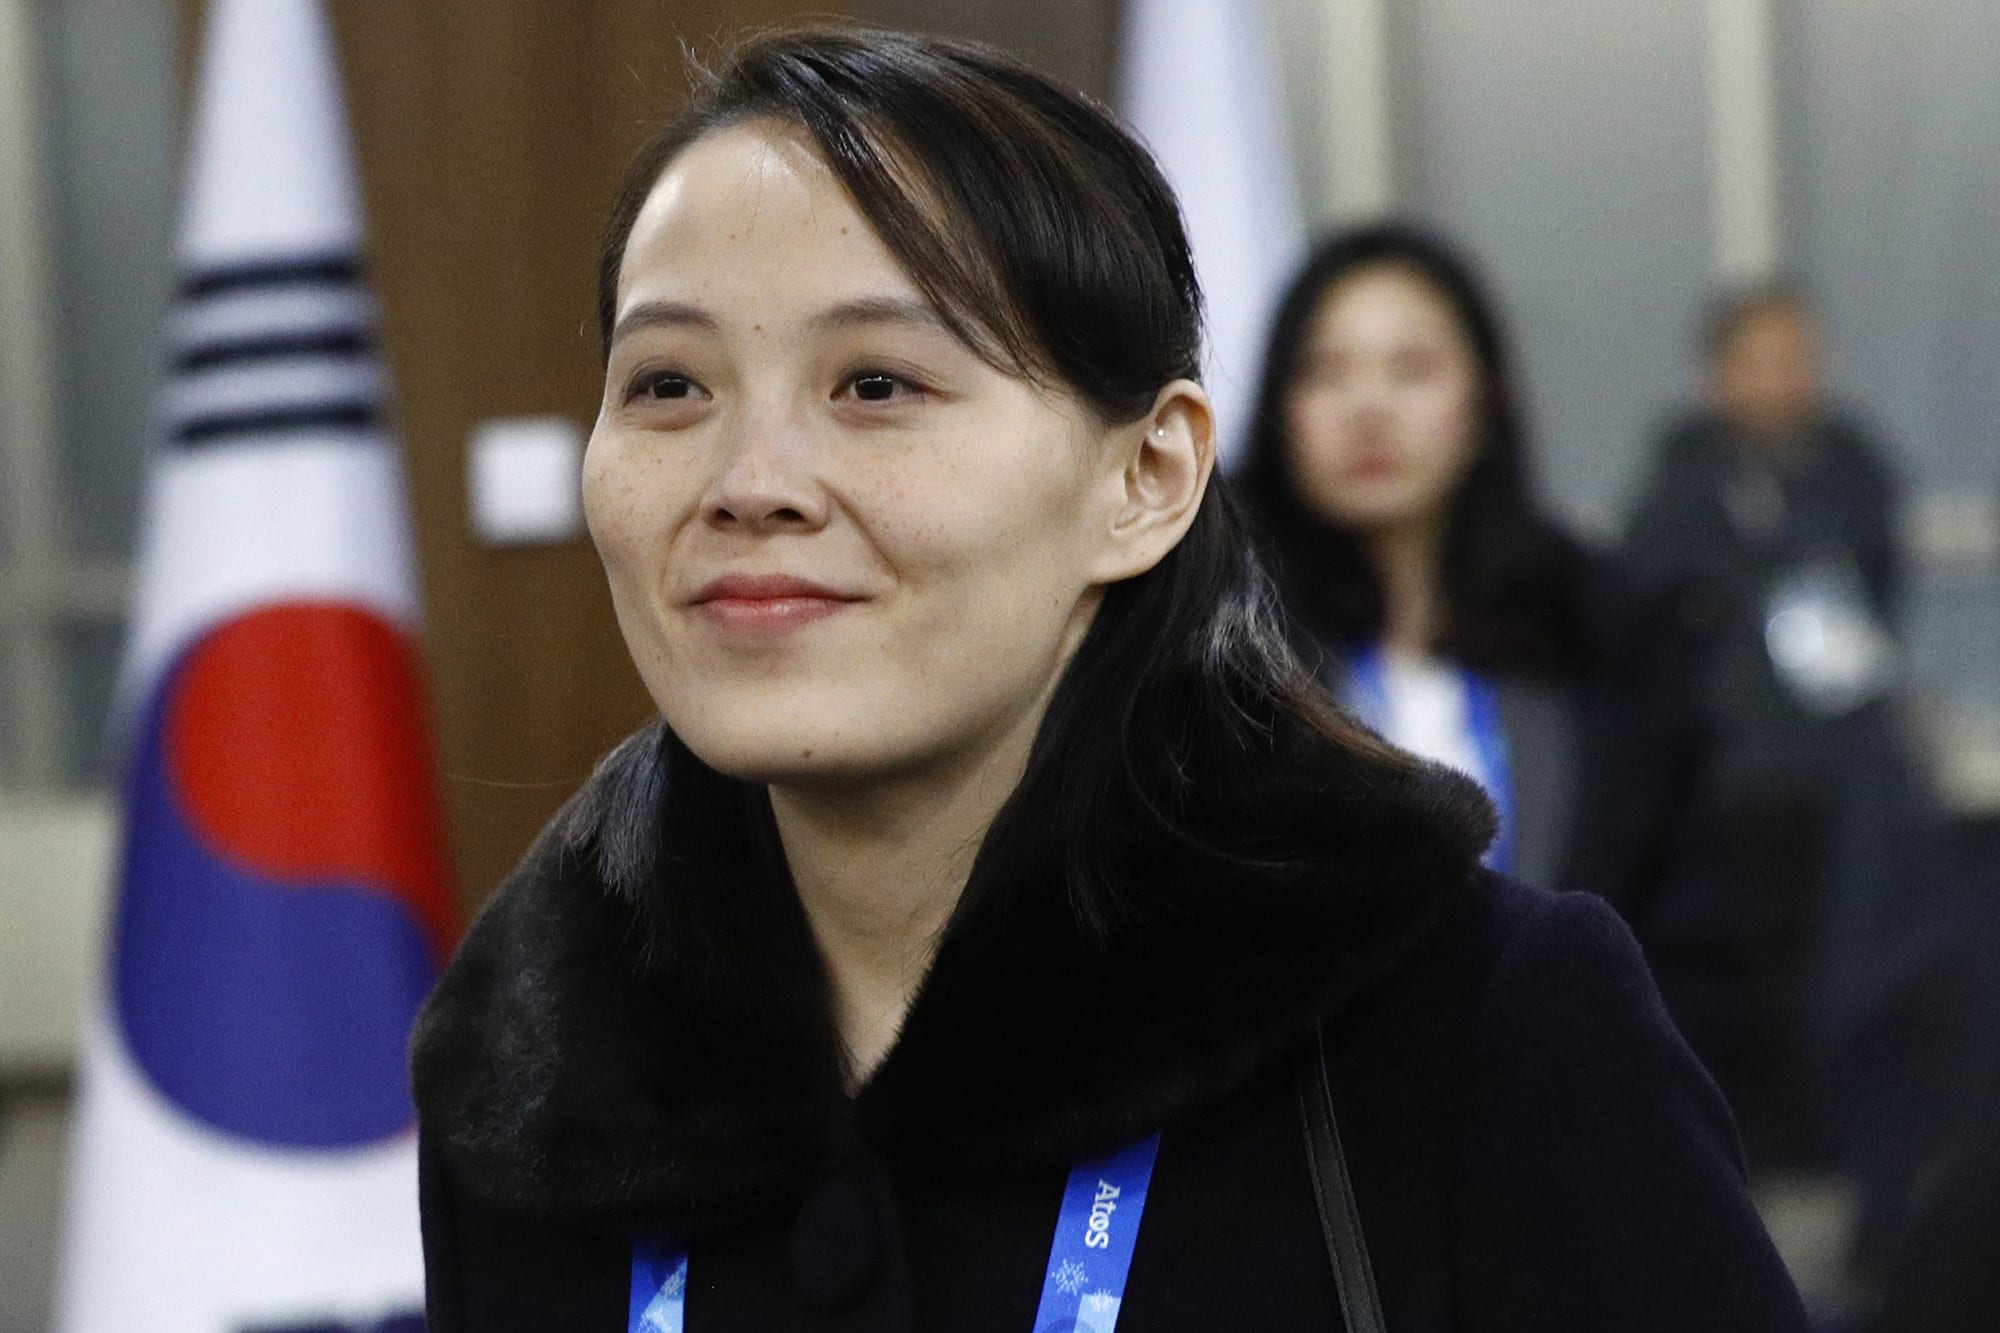 South Korea has spent $000 on Kim Jong Un's sister